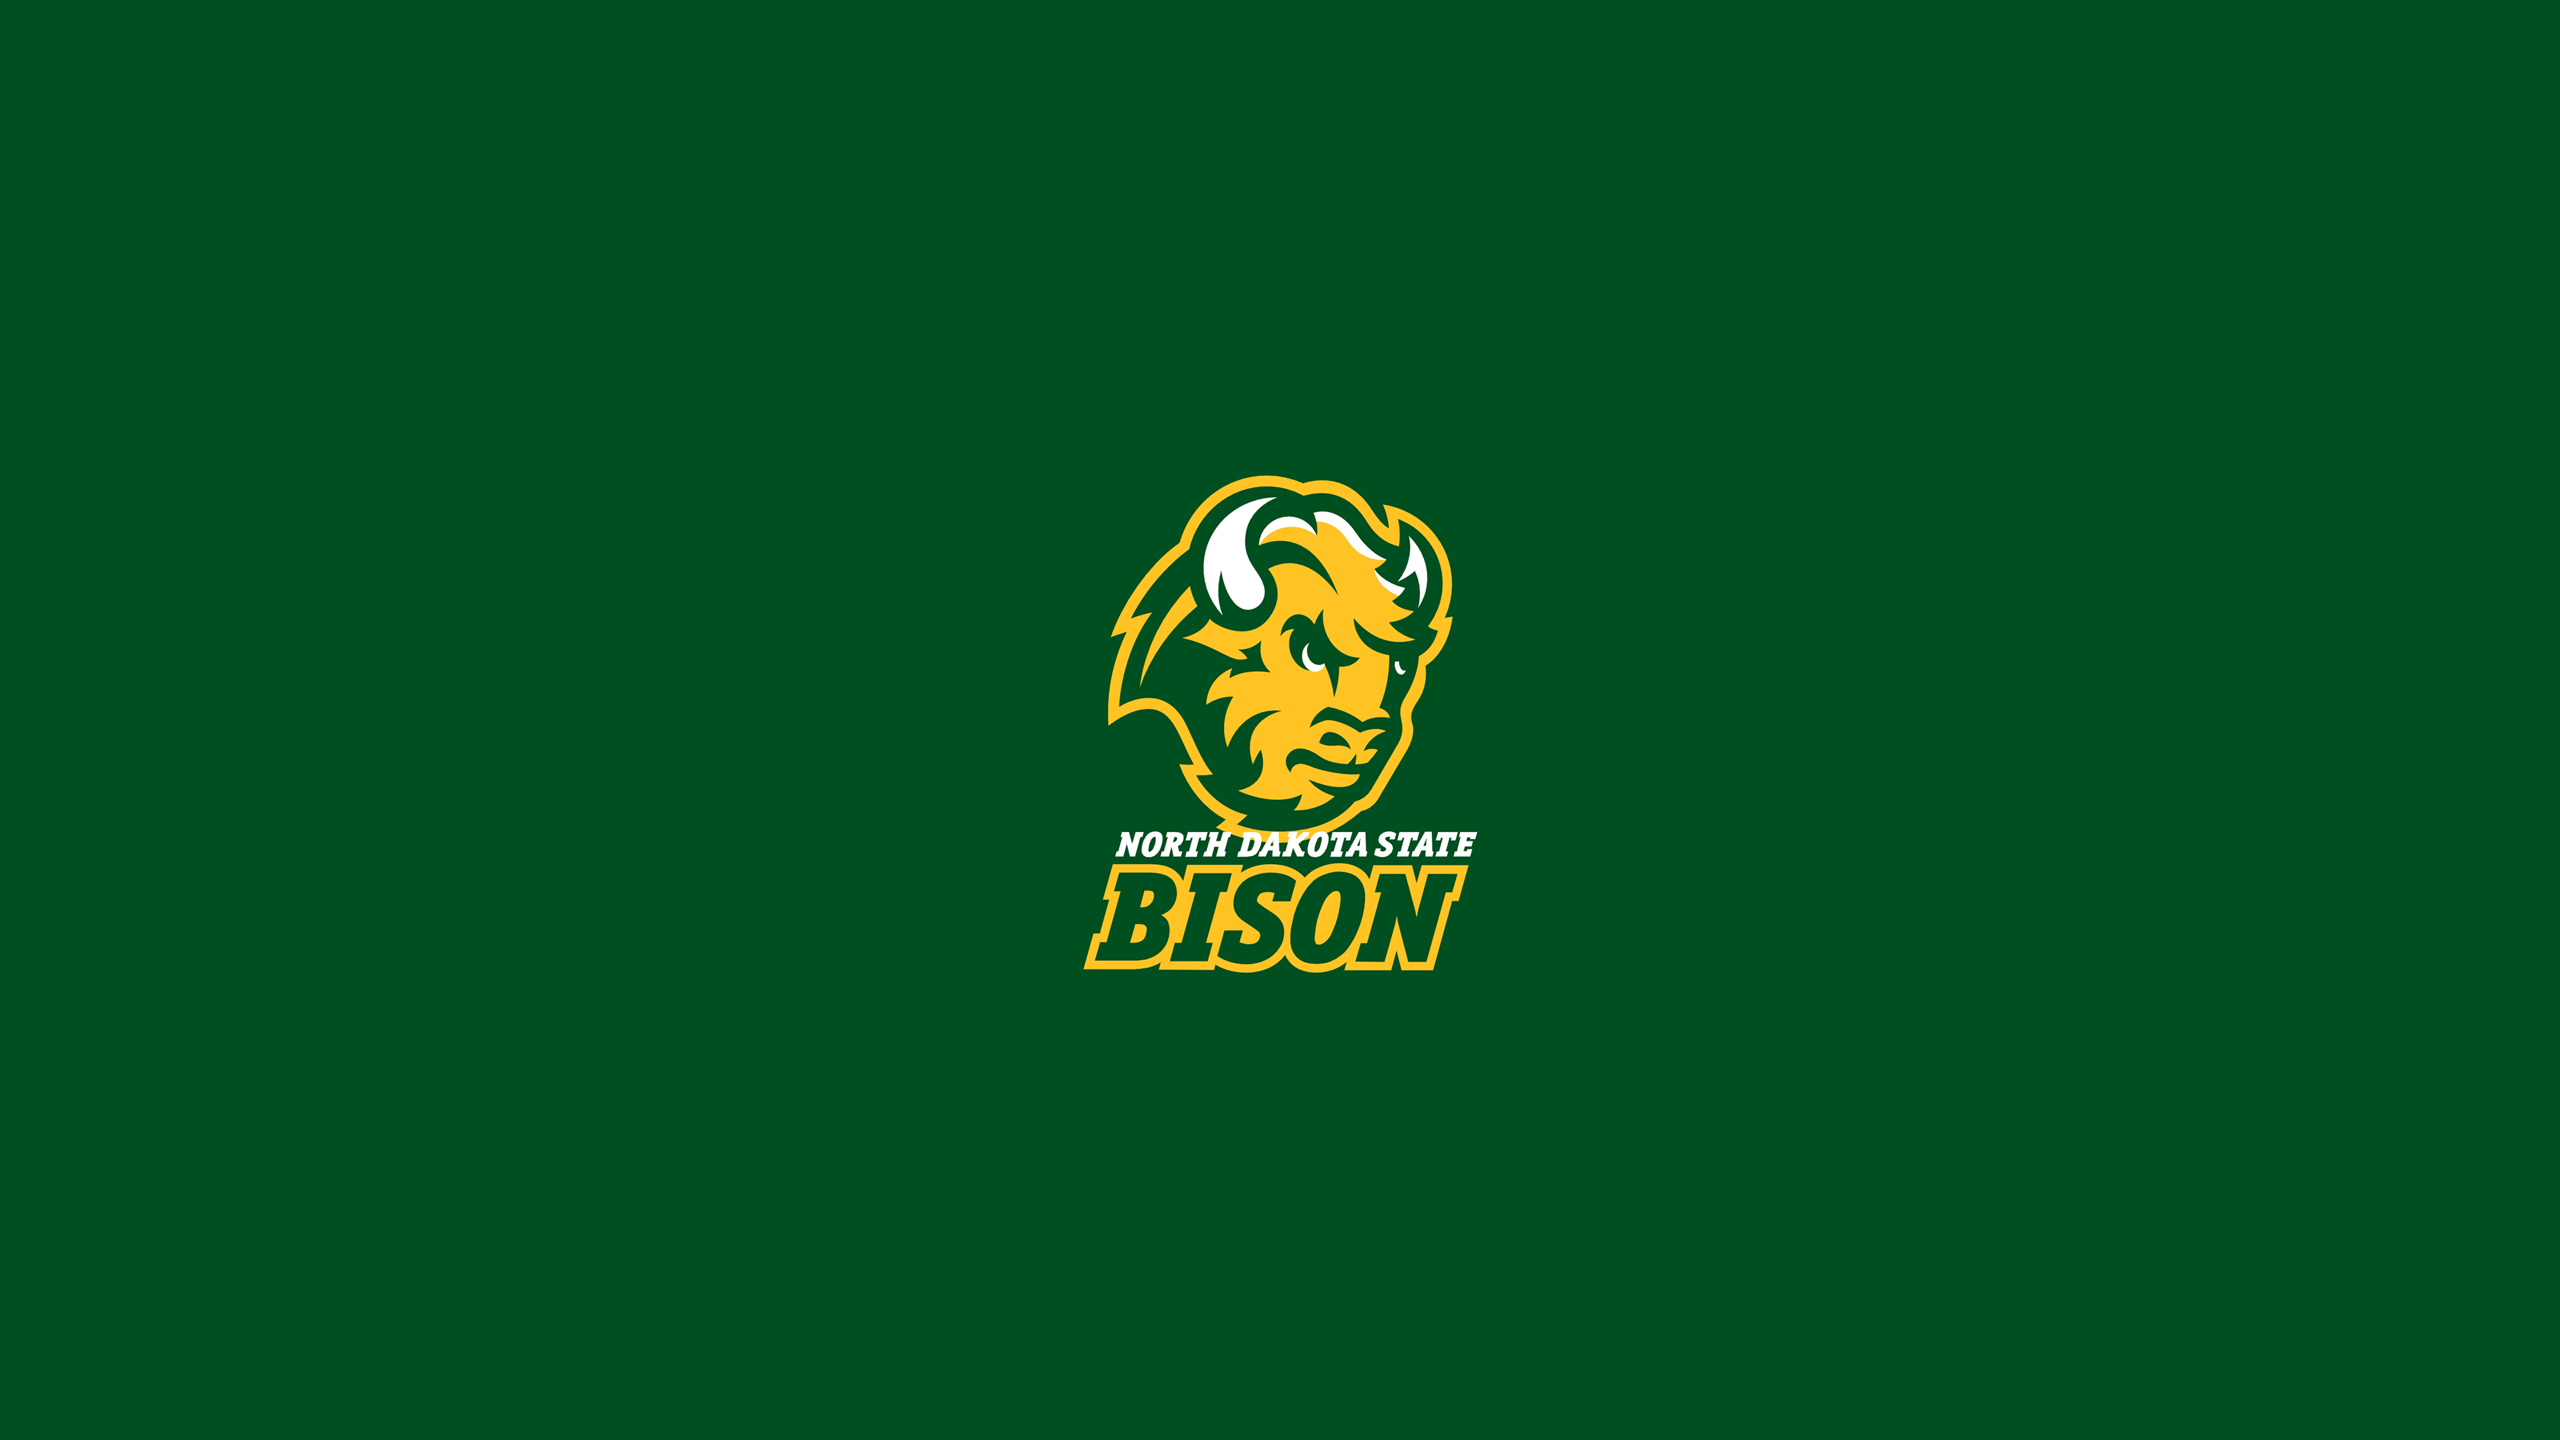 North Dakota State Bison Basketball - NCAAB - Square Bettor